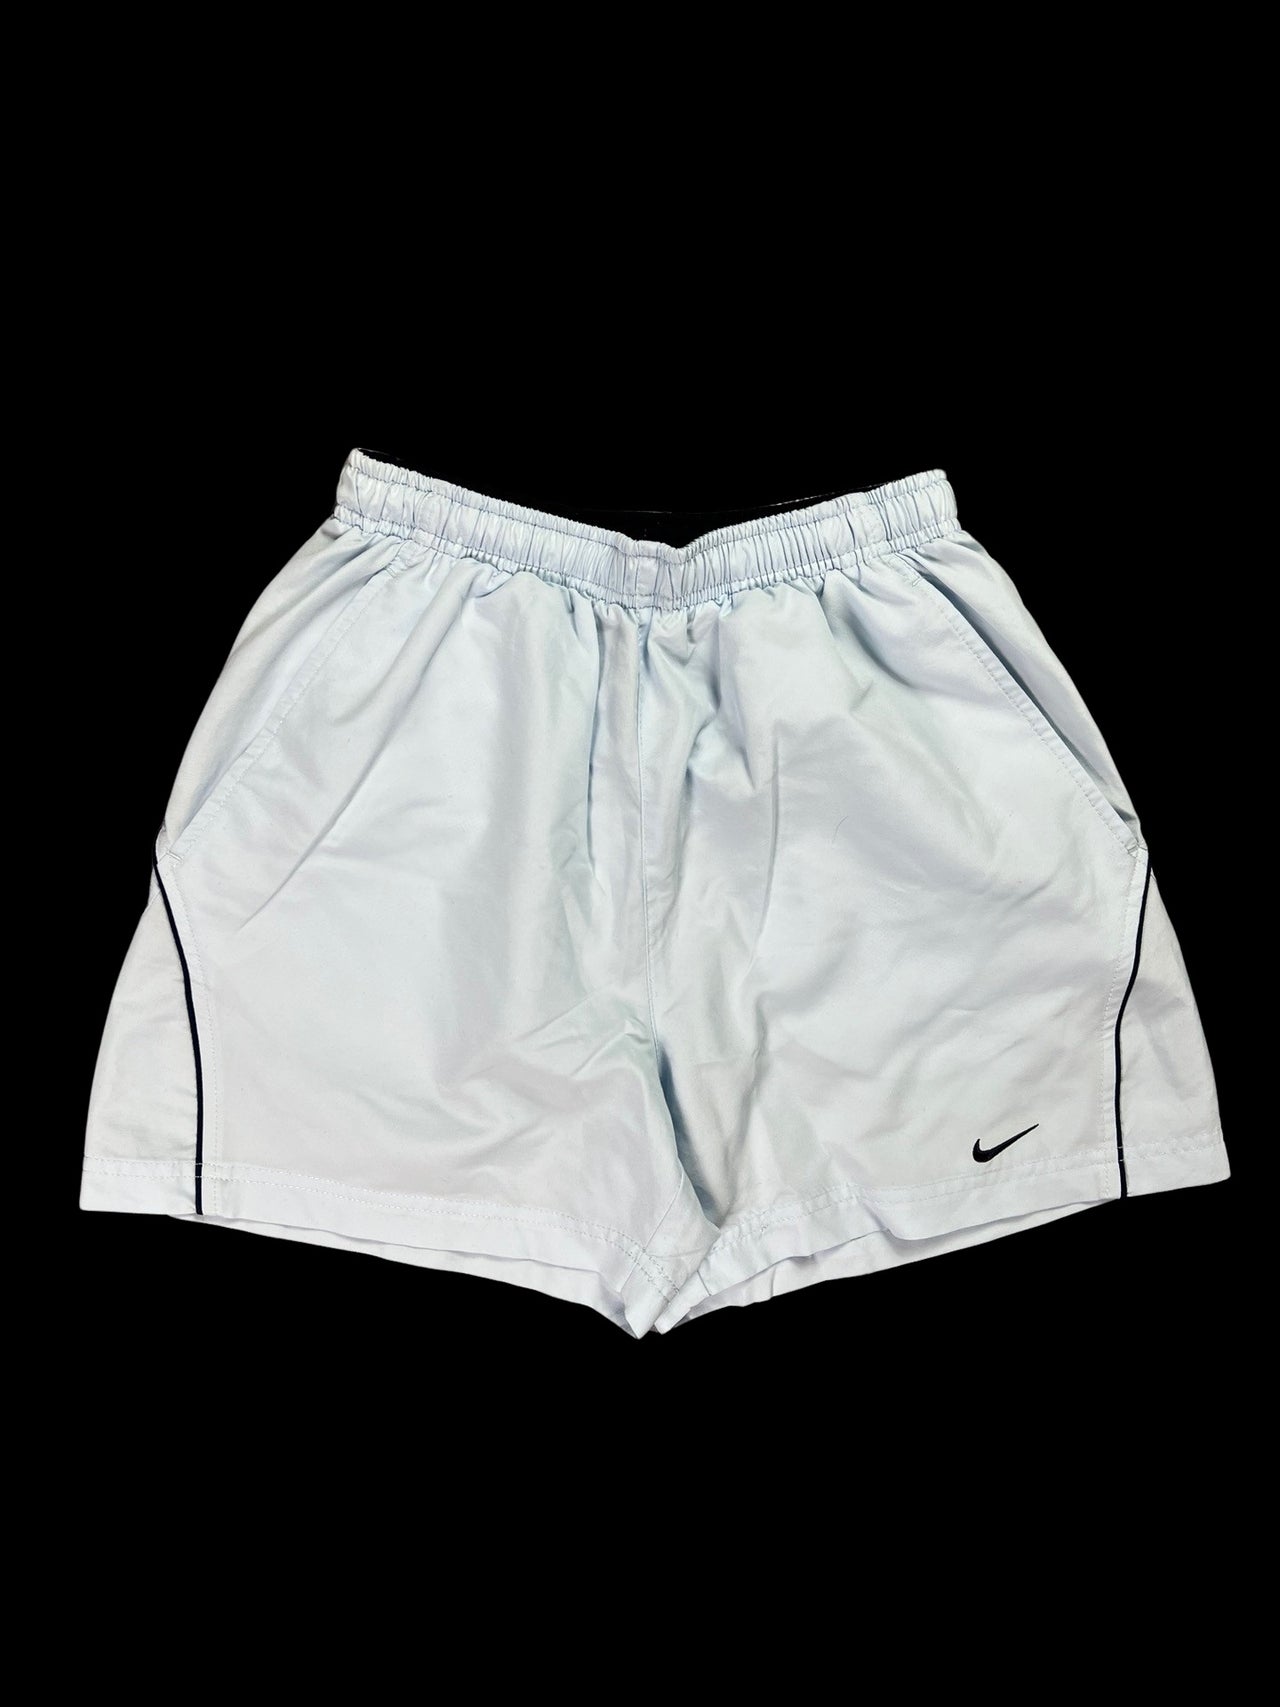 Nike Shorts (WMNS S)